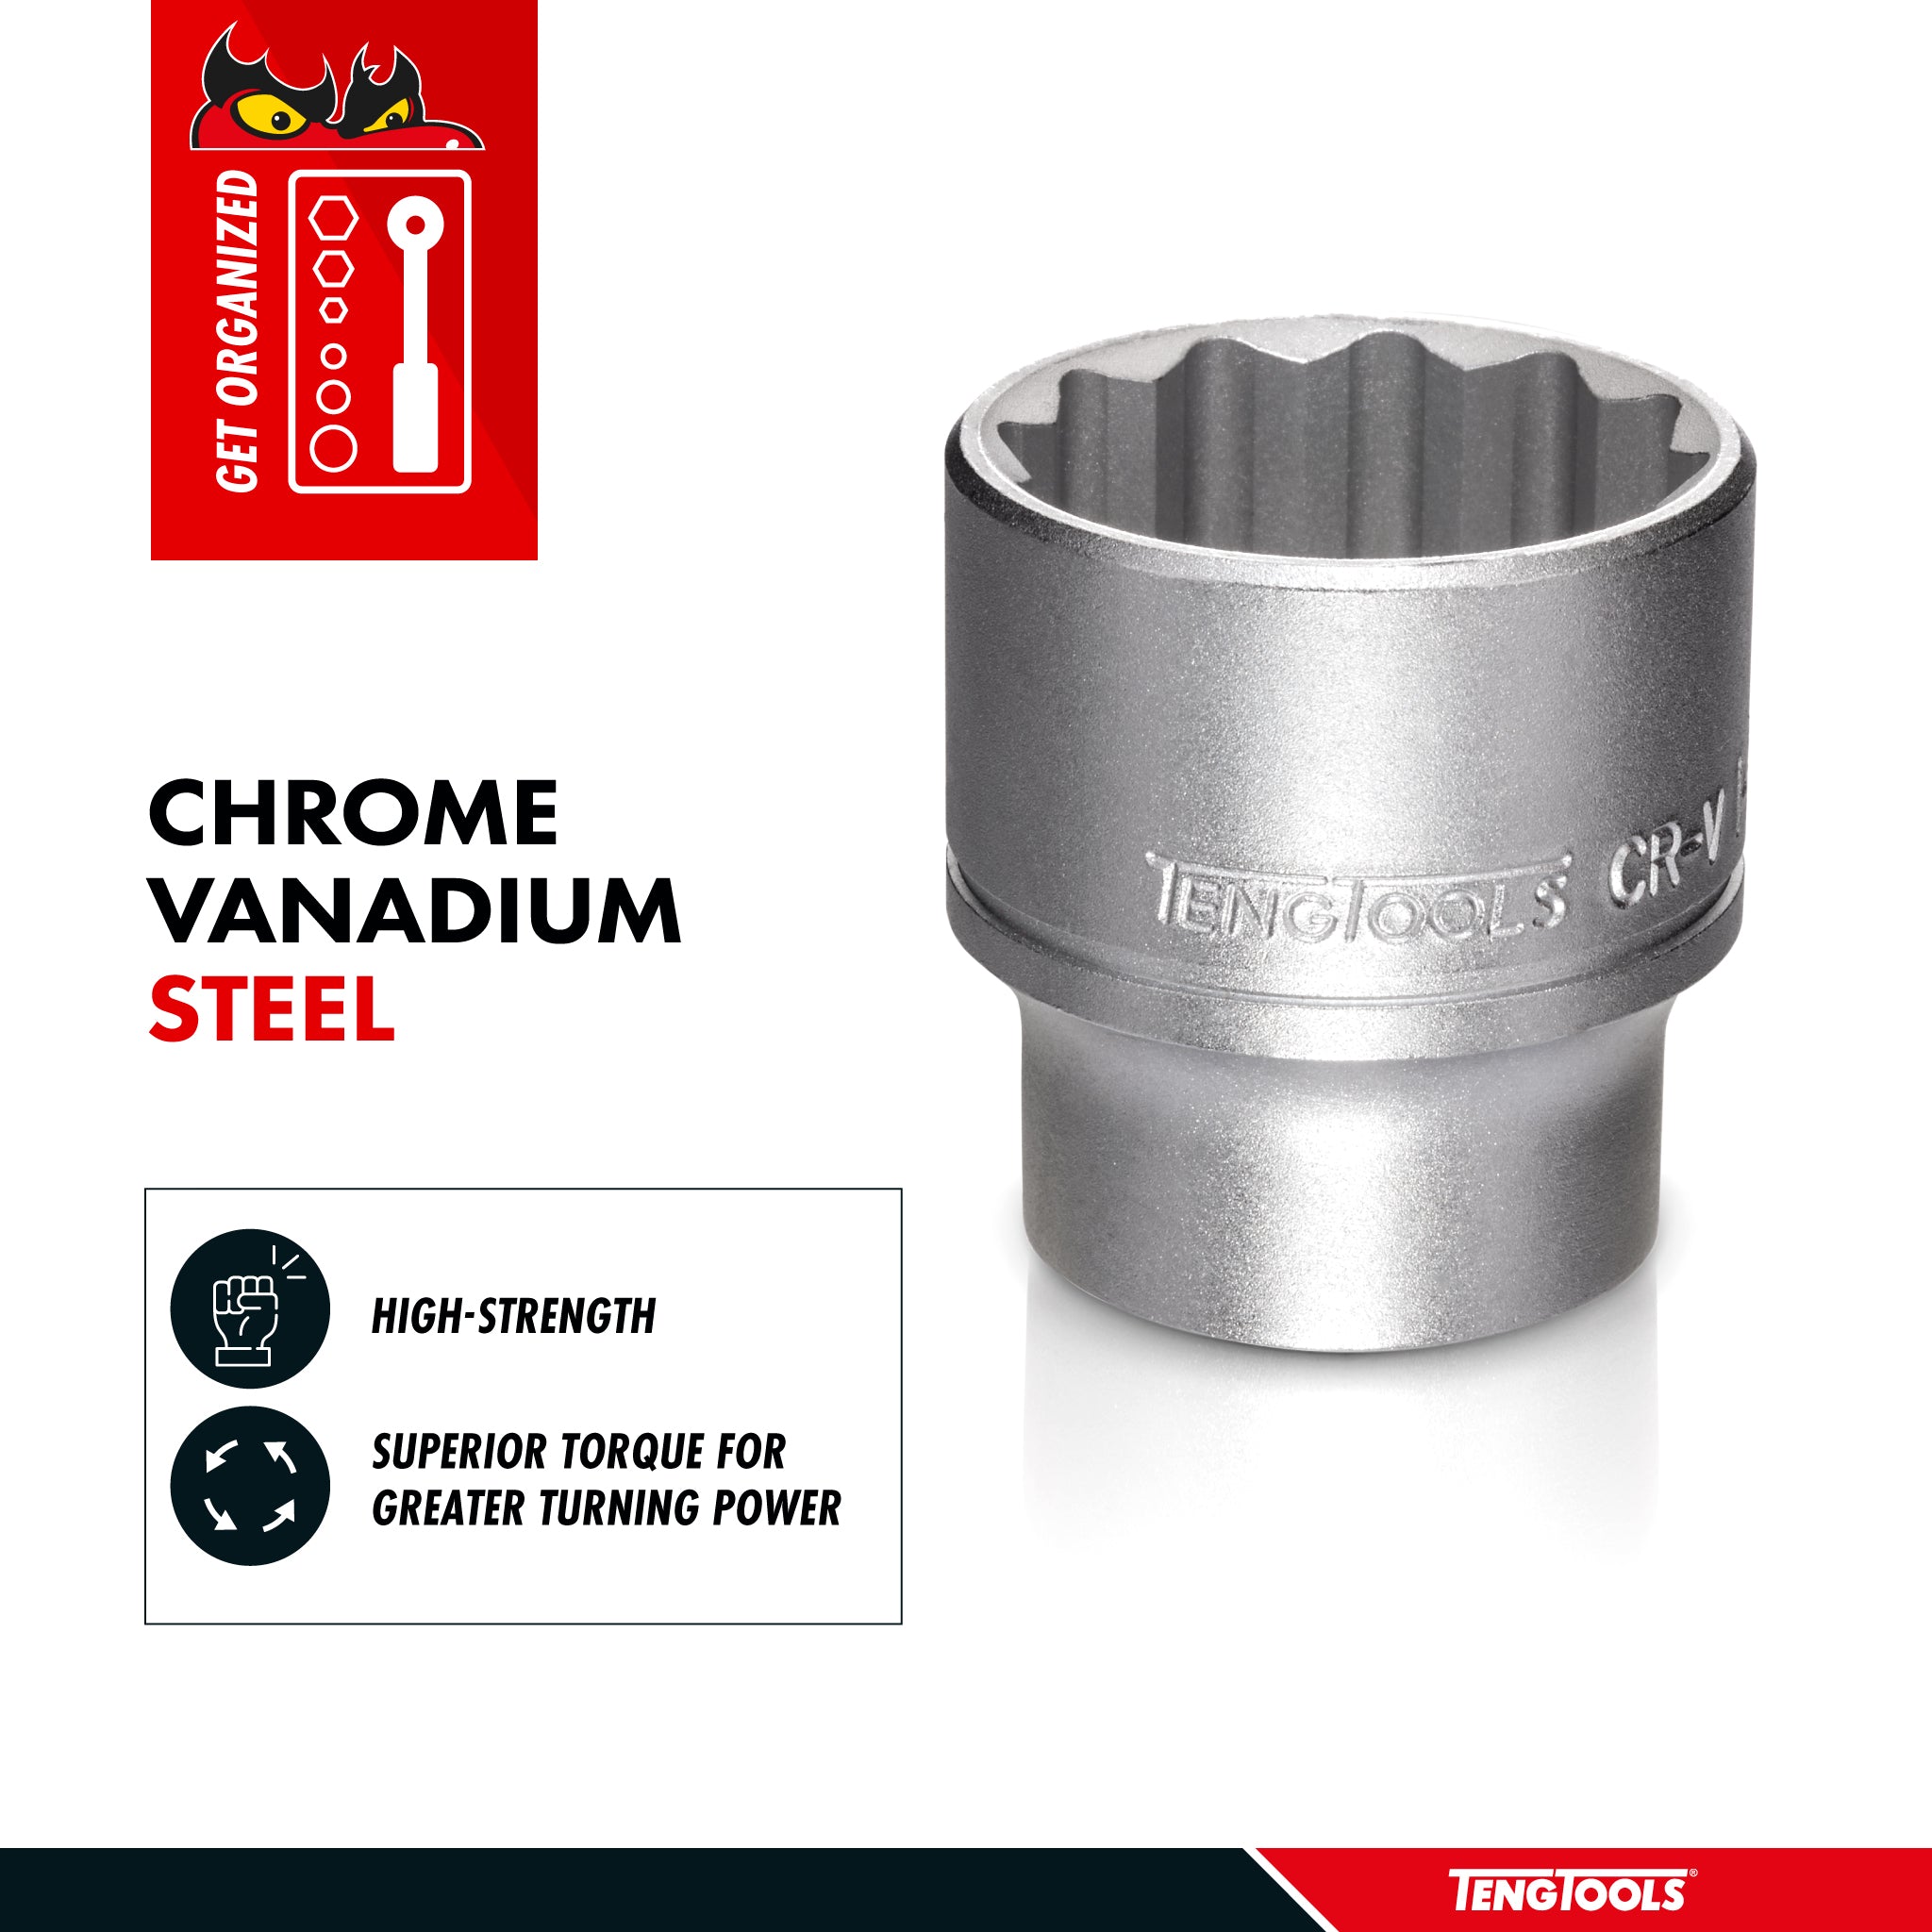 Teng Tools 1/2 Inch Drive 12 Point Metric Shallow Chrome Vanadium Sockets - 17mm